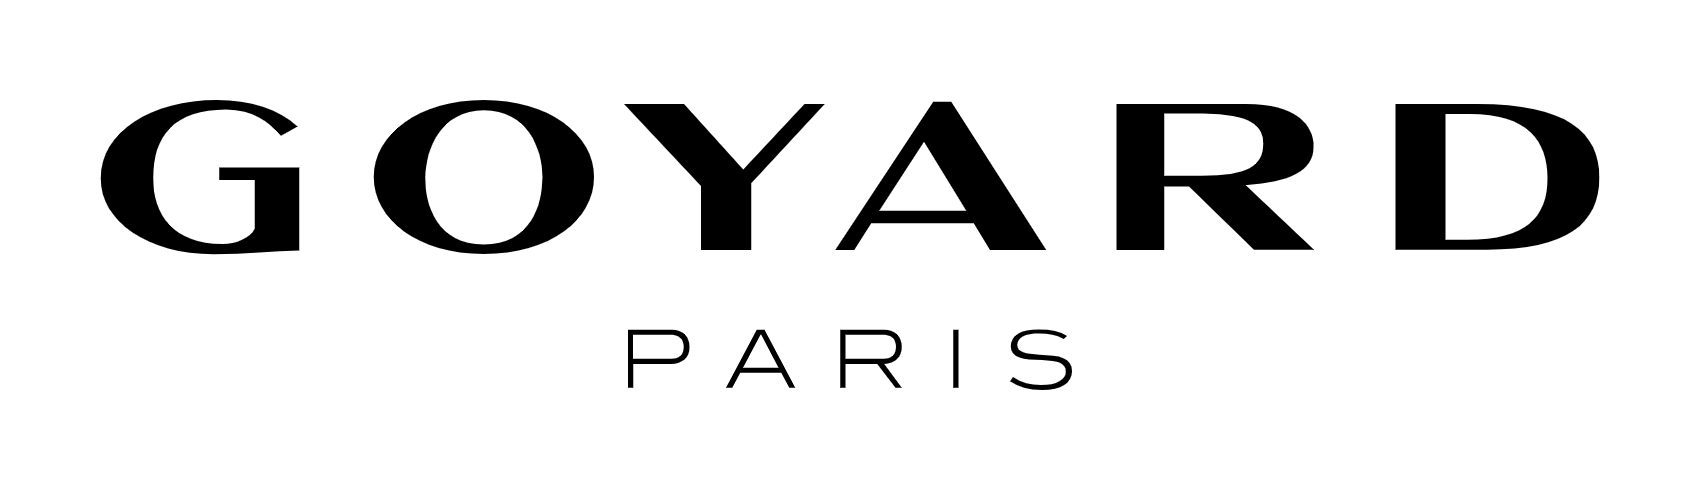 Goyard-Paris